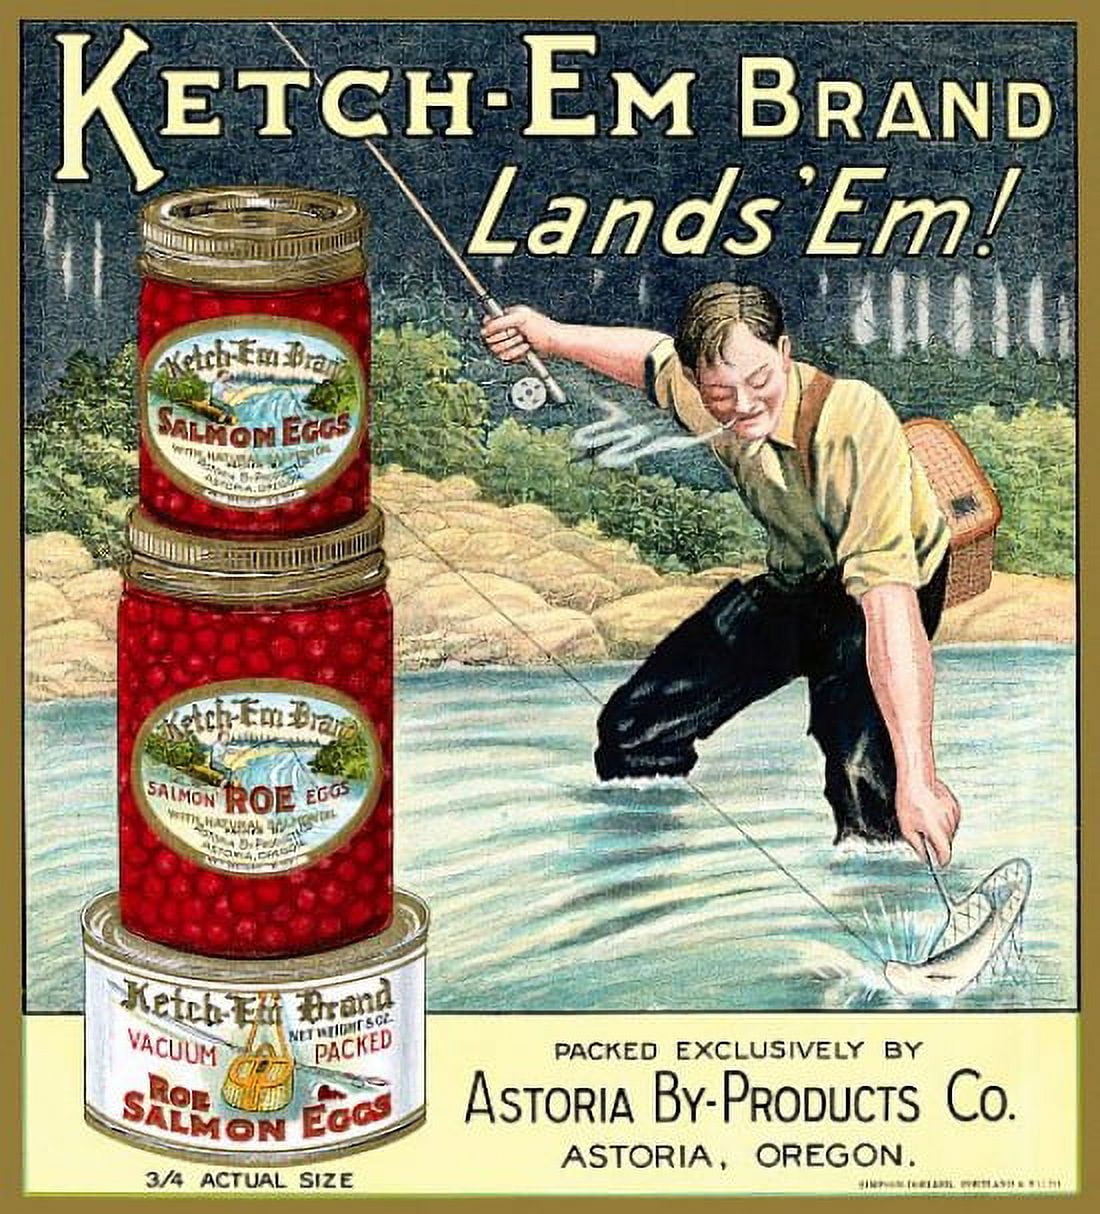 Ketch - Em Brand Salmon Eggs label Poster Print (24 x 36) 